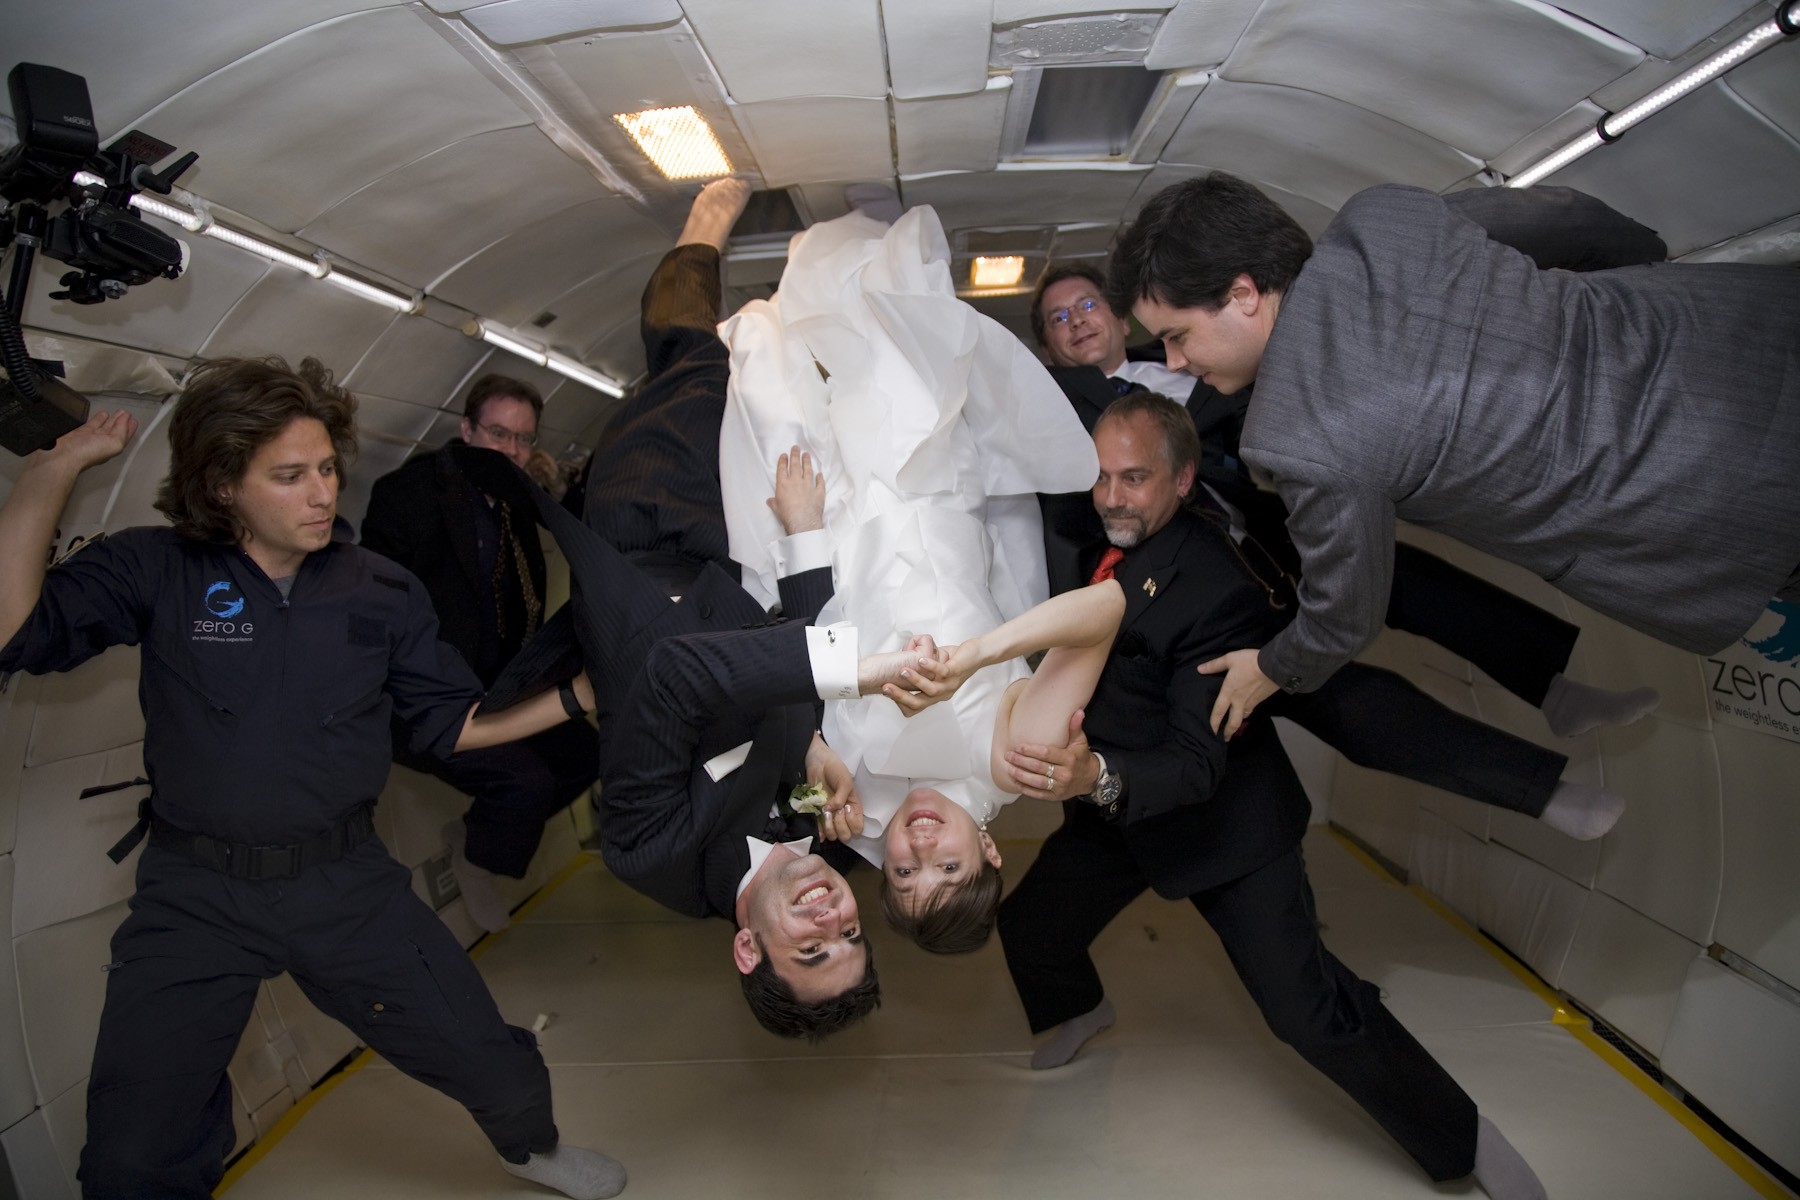 weightless wedding experience zero-g zero gravity weddings